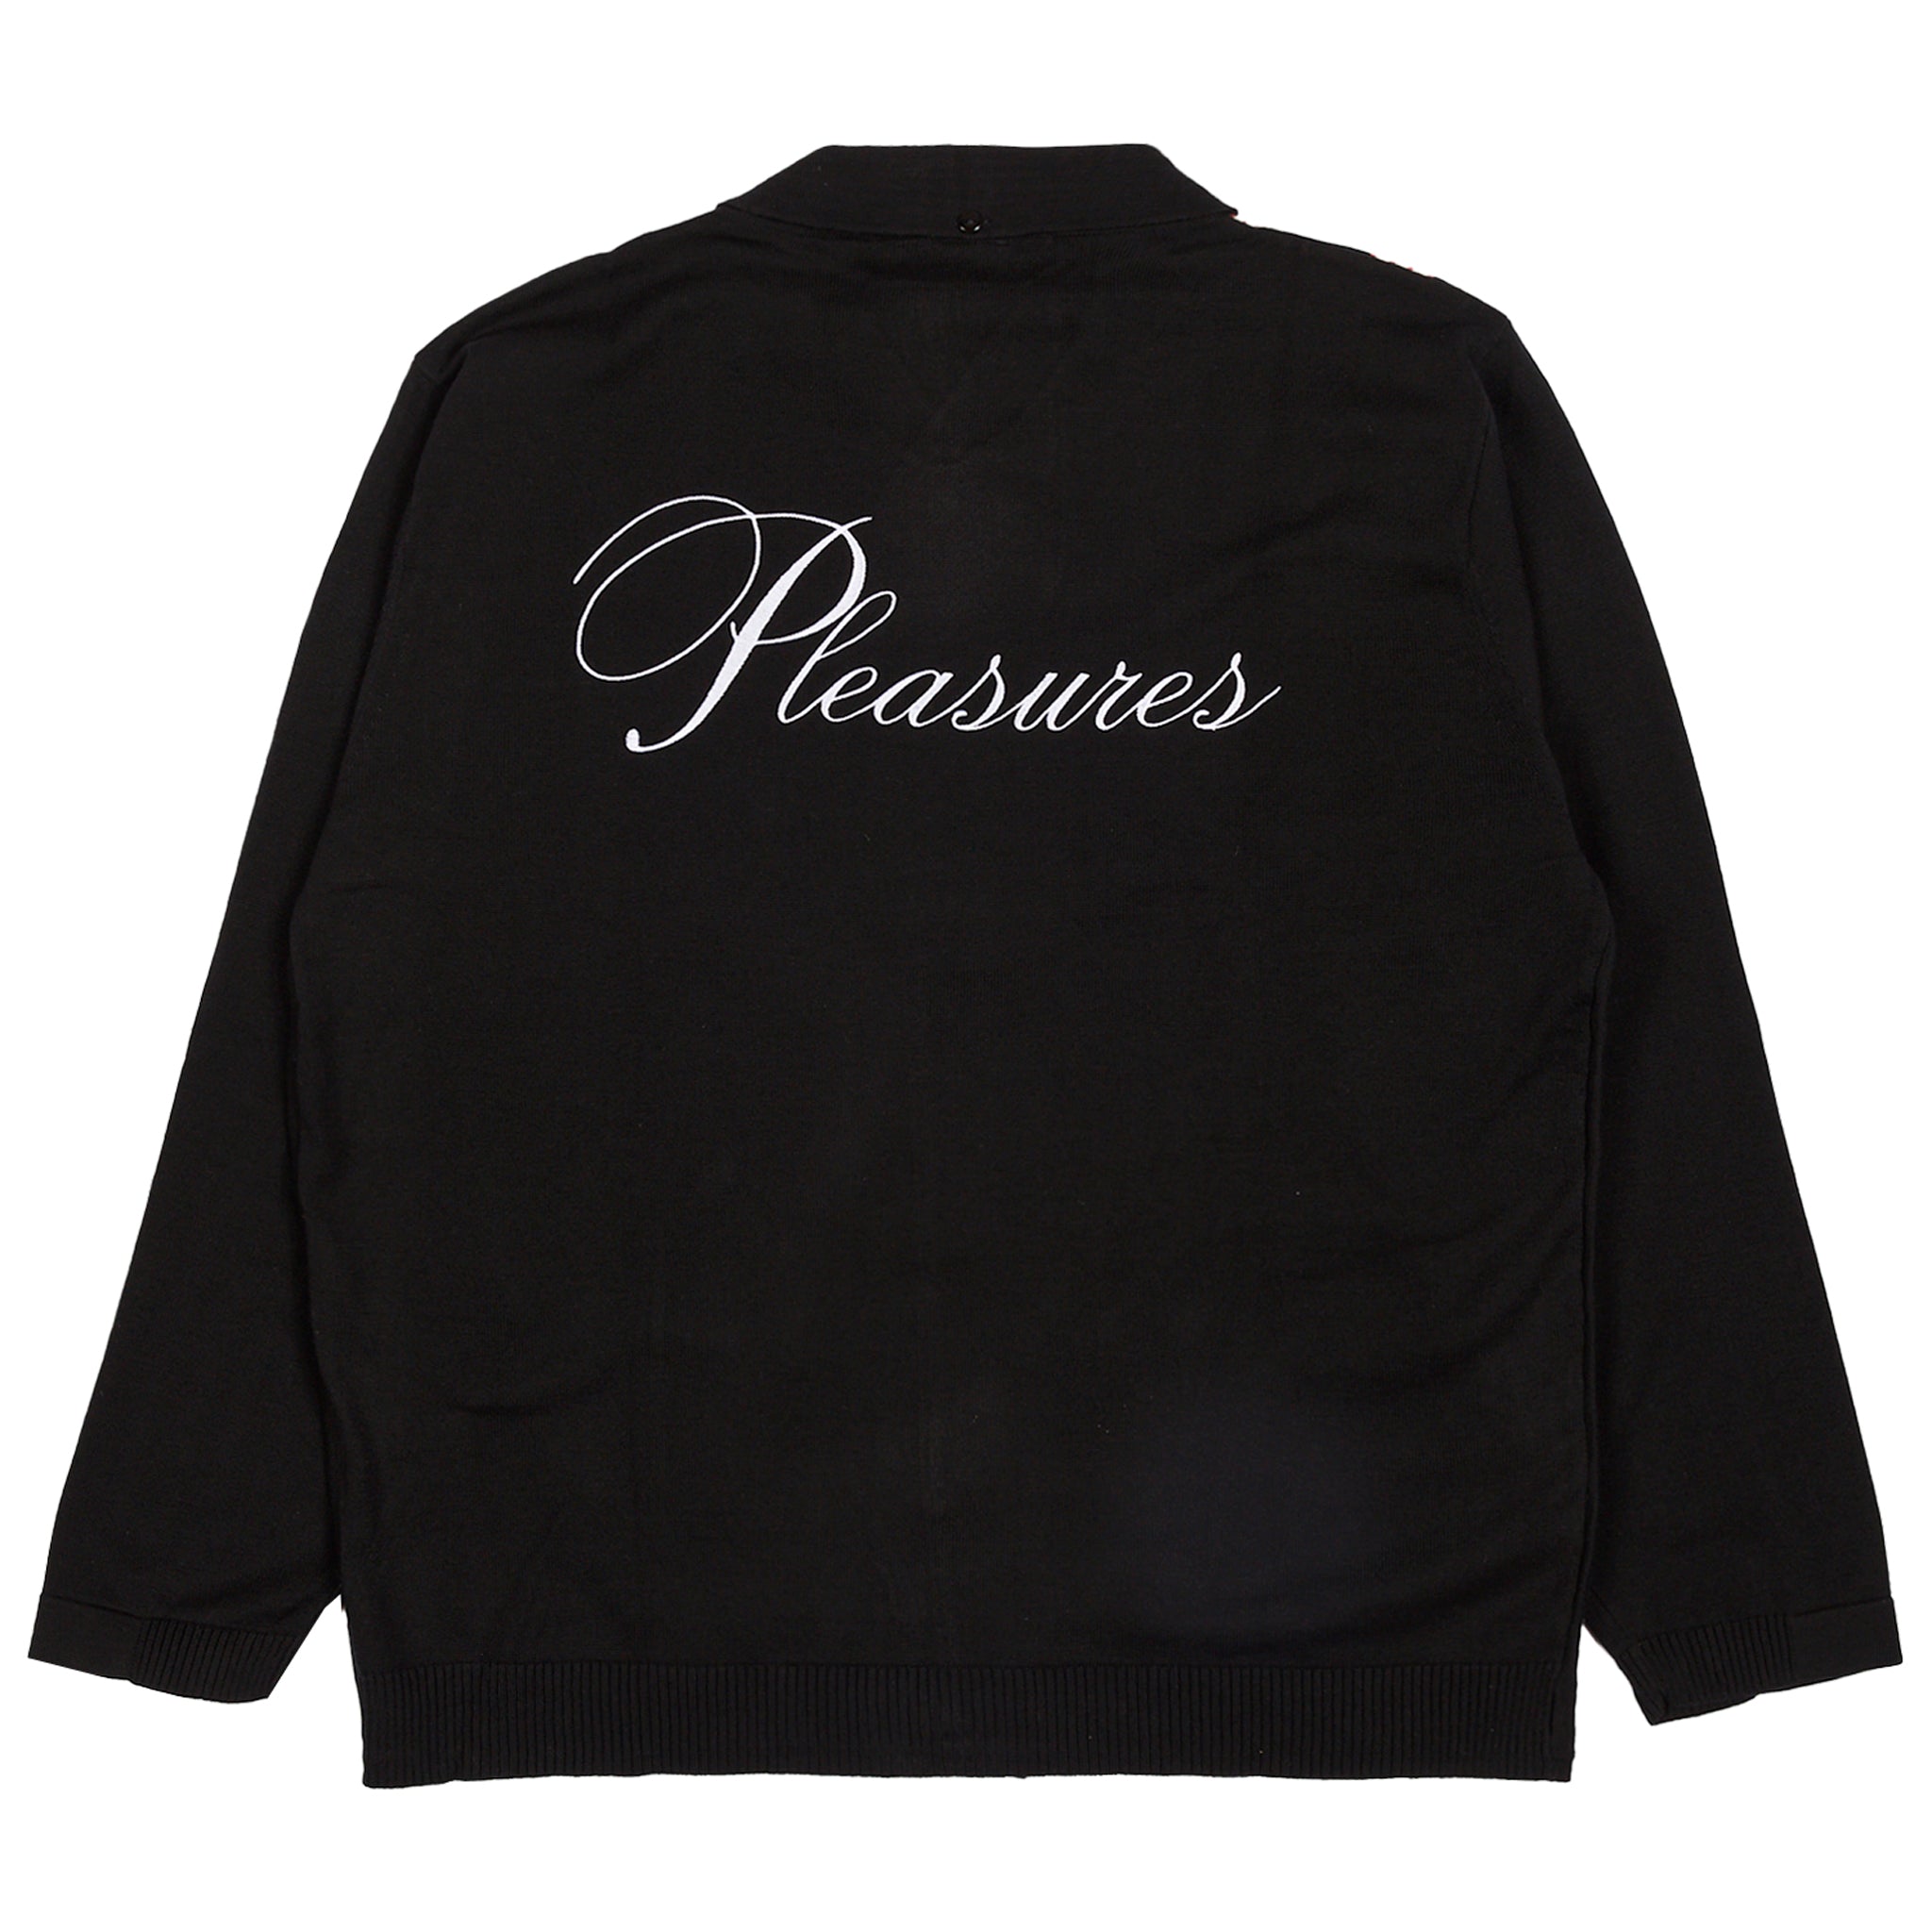 Playboy x Pleasures Club Woven Cardigan Sweater